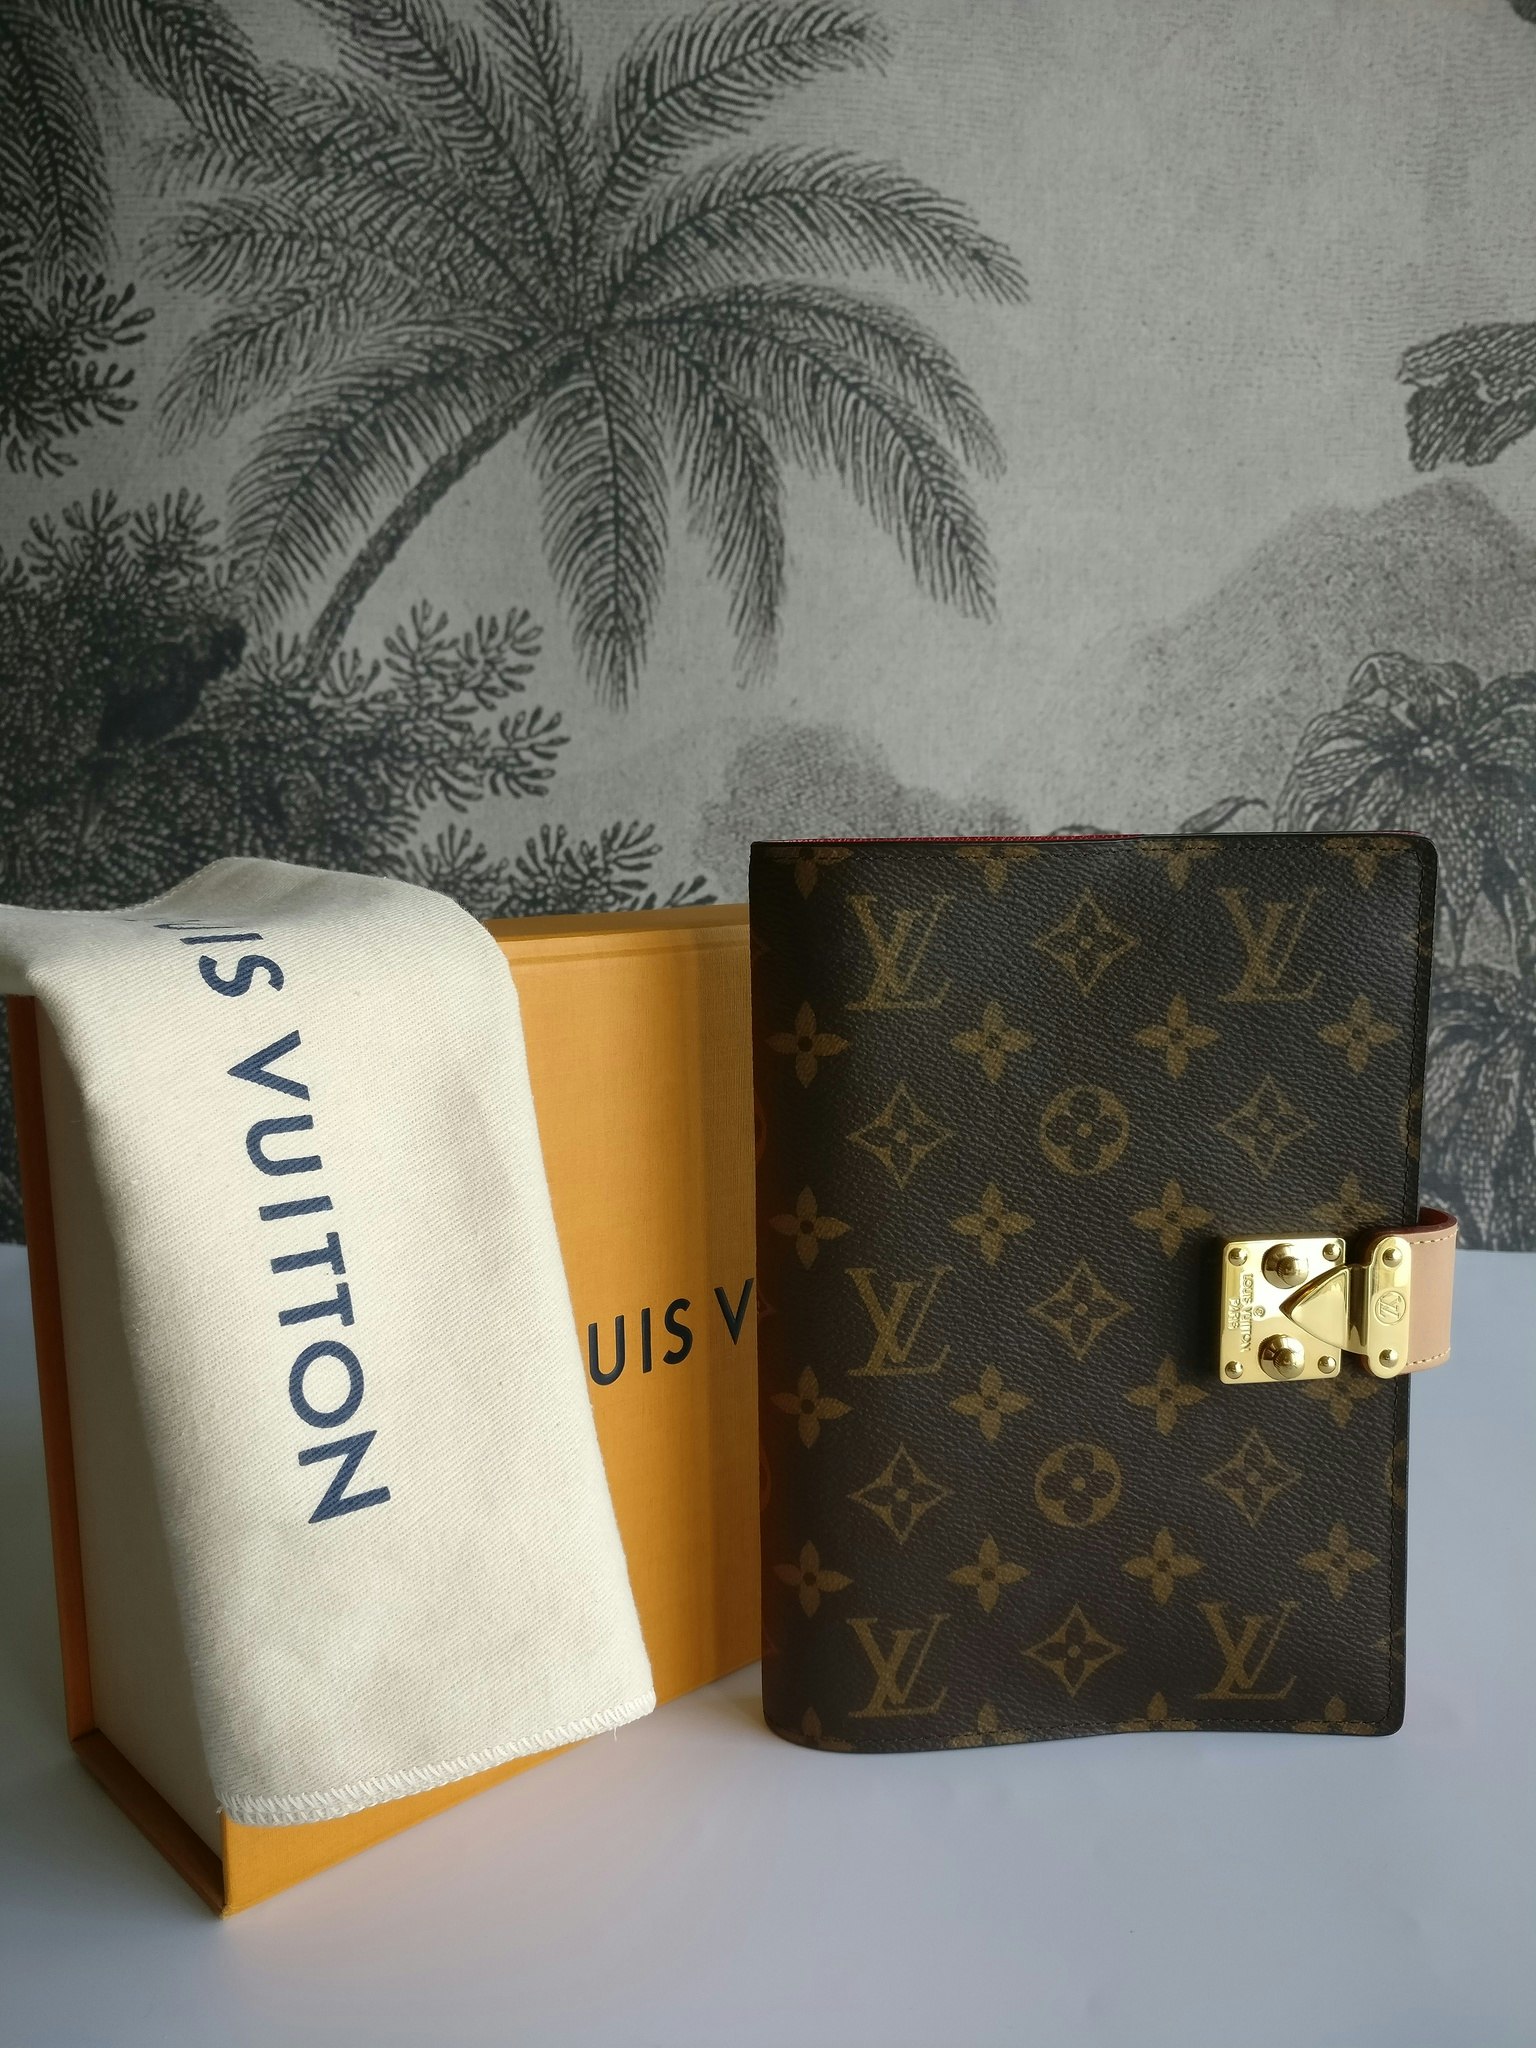 Louis Vuitton Paul Notebook Cover